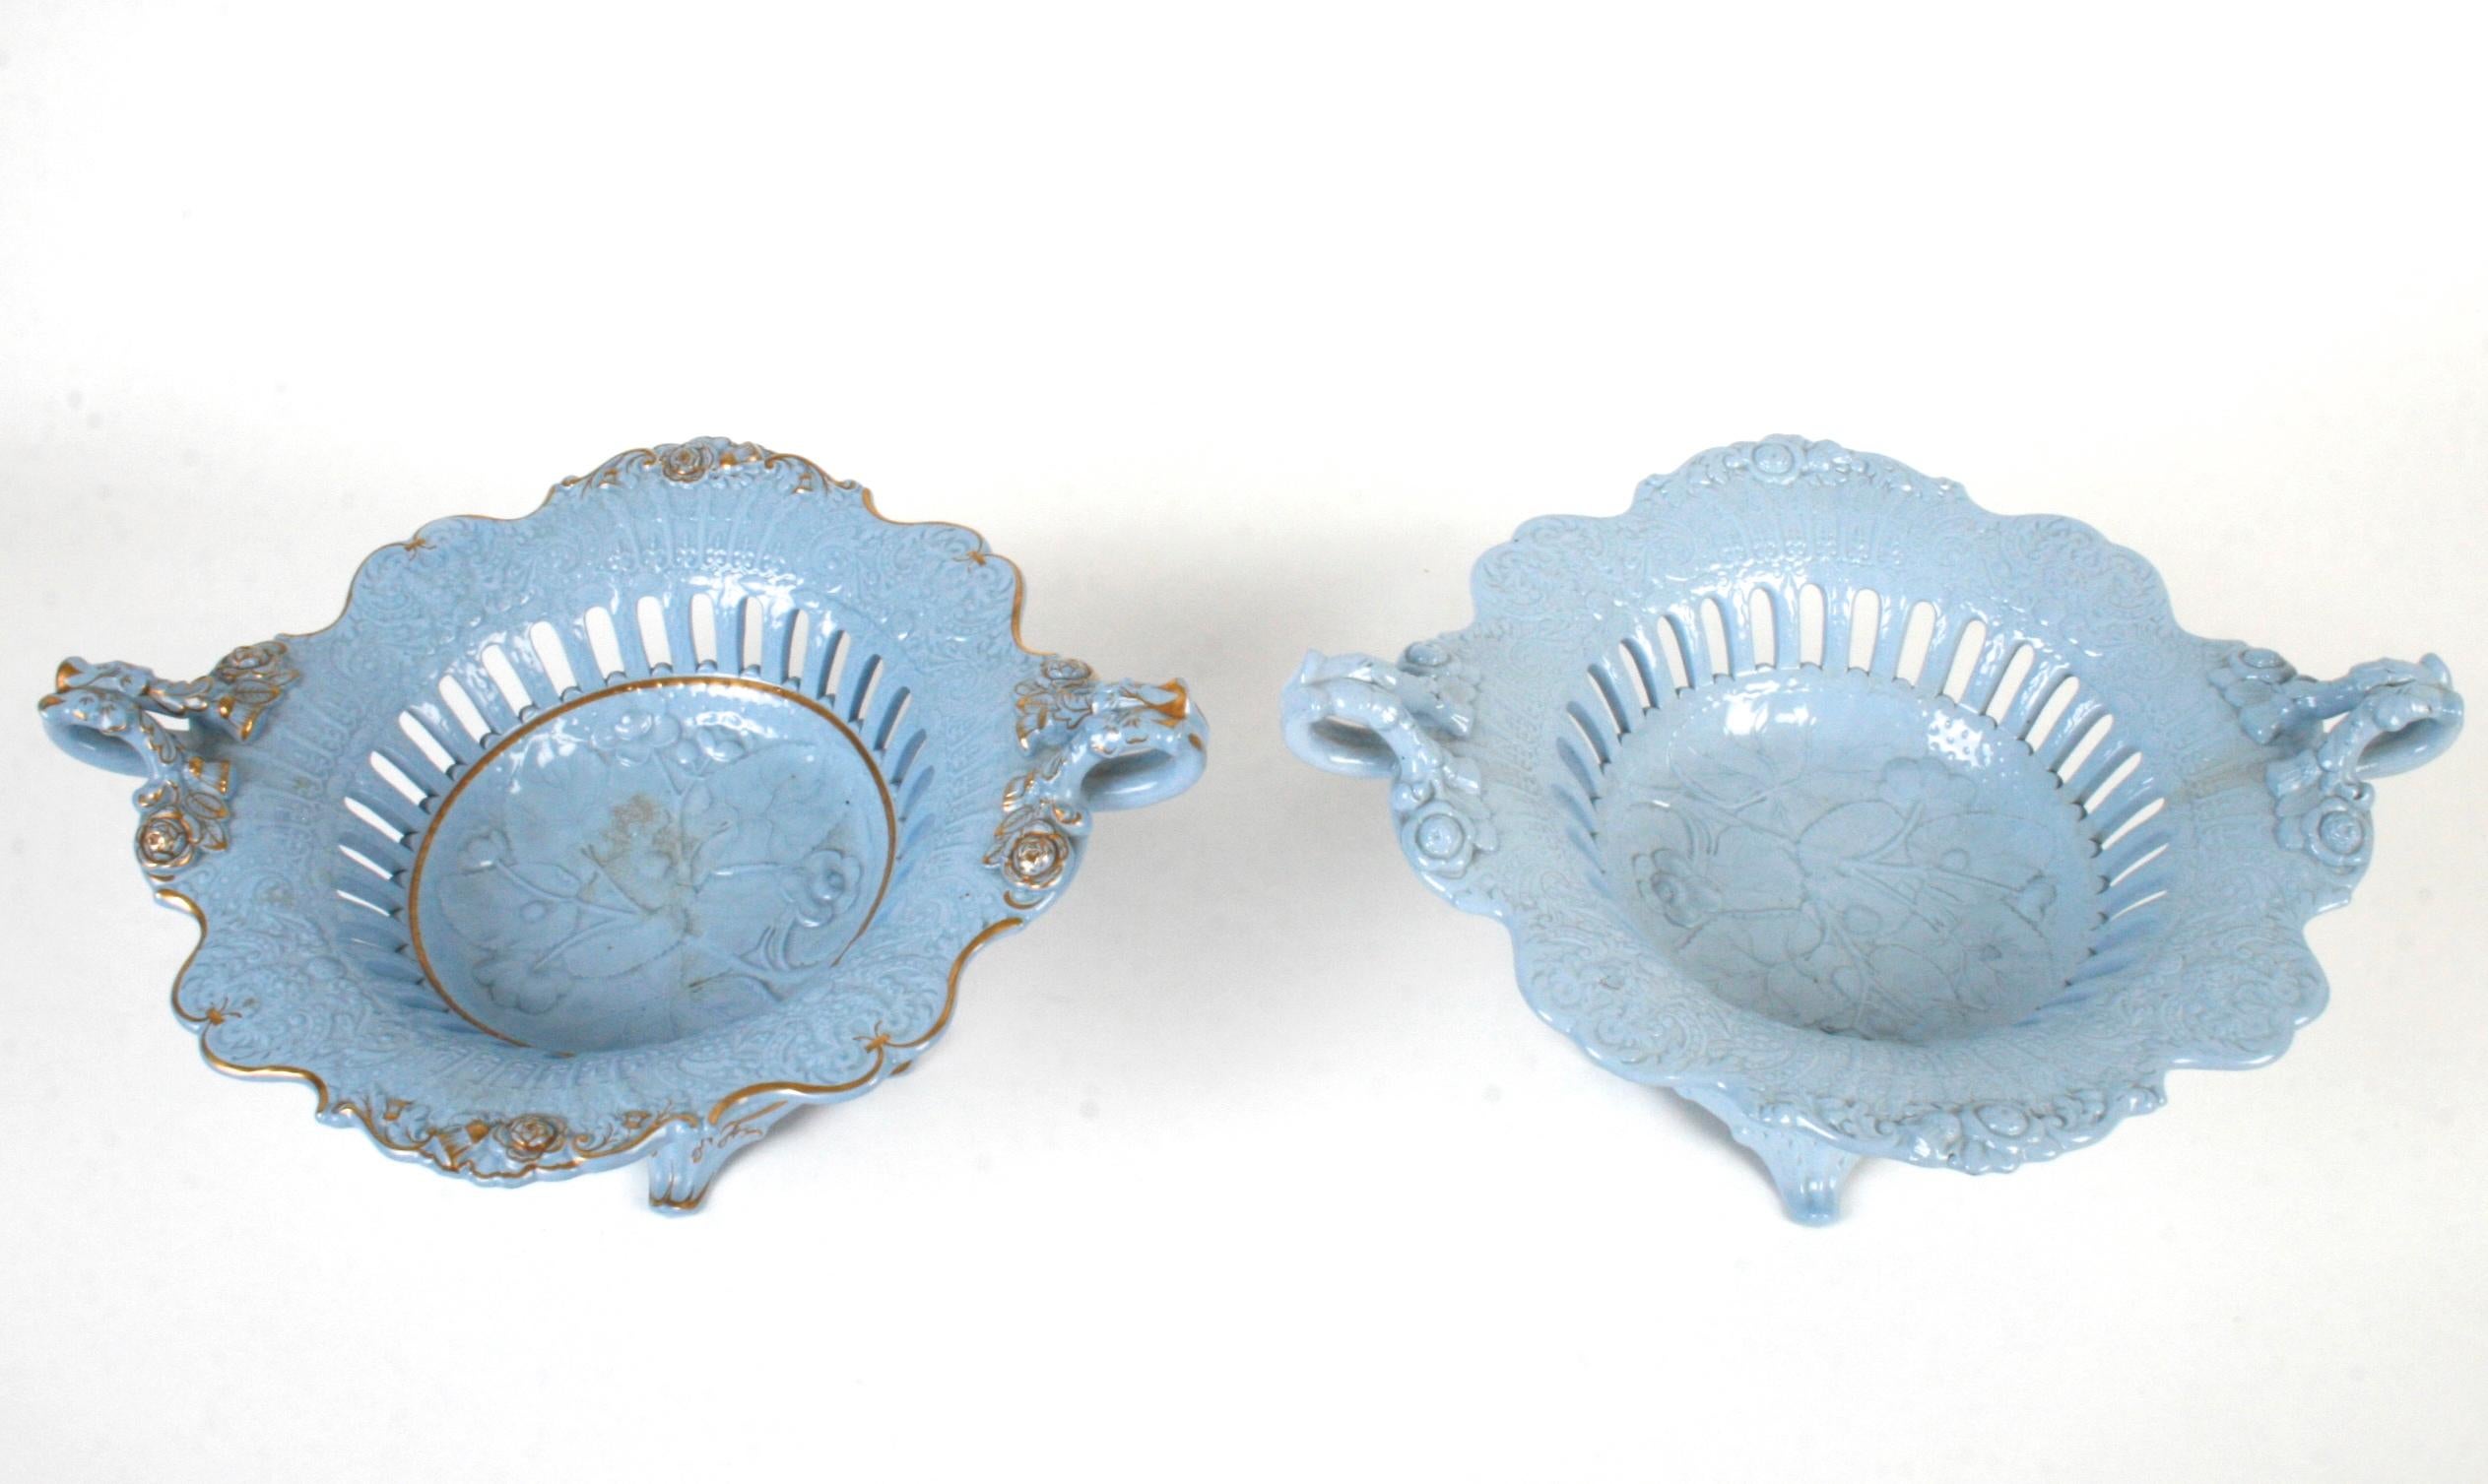 Stoneware William Ridgway & Co. Blue Relief Molded Staffordshire Dinnerware, circa 1830